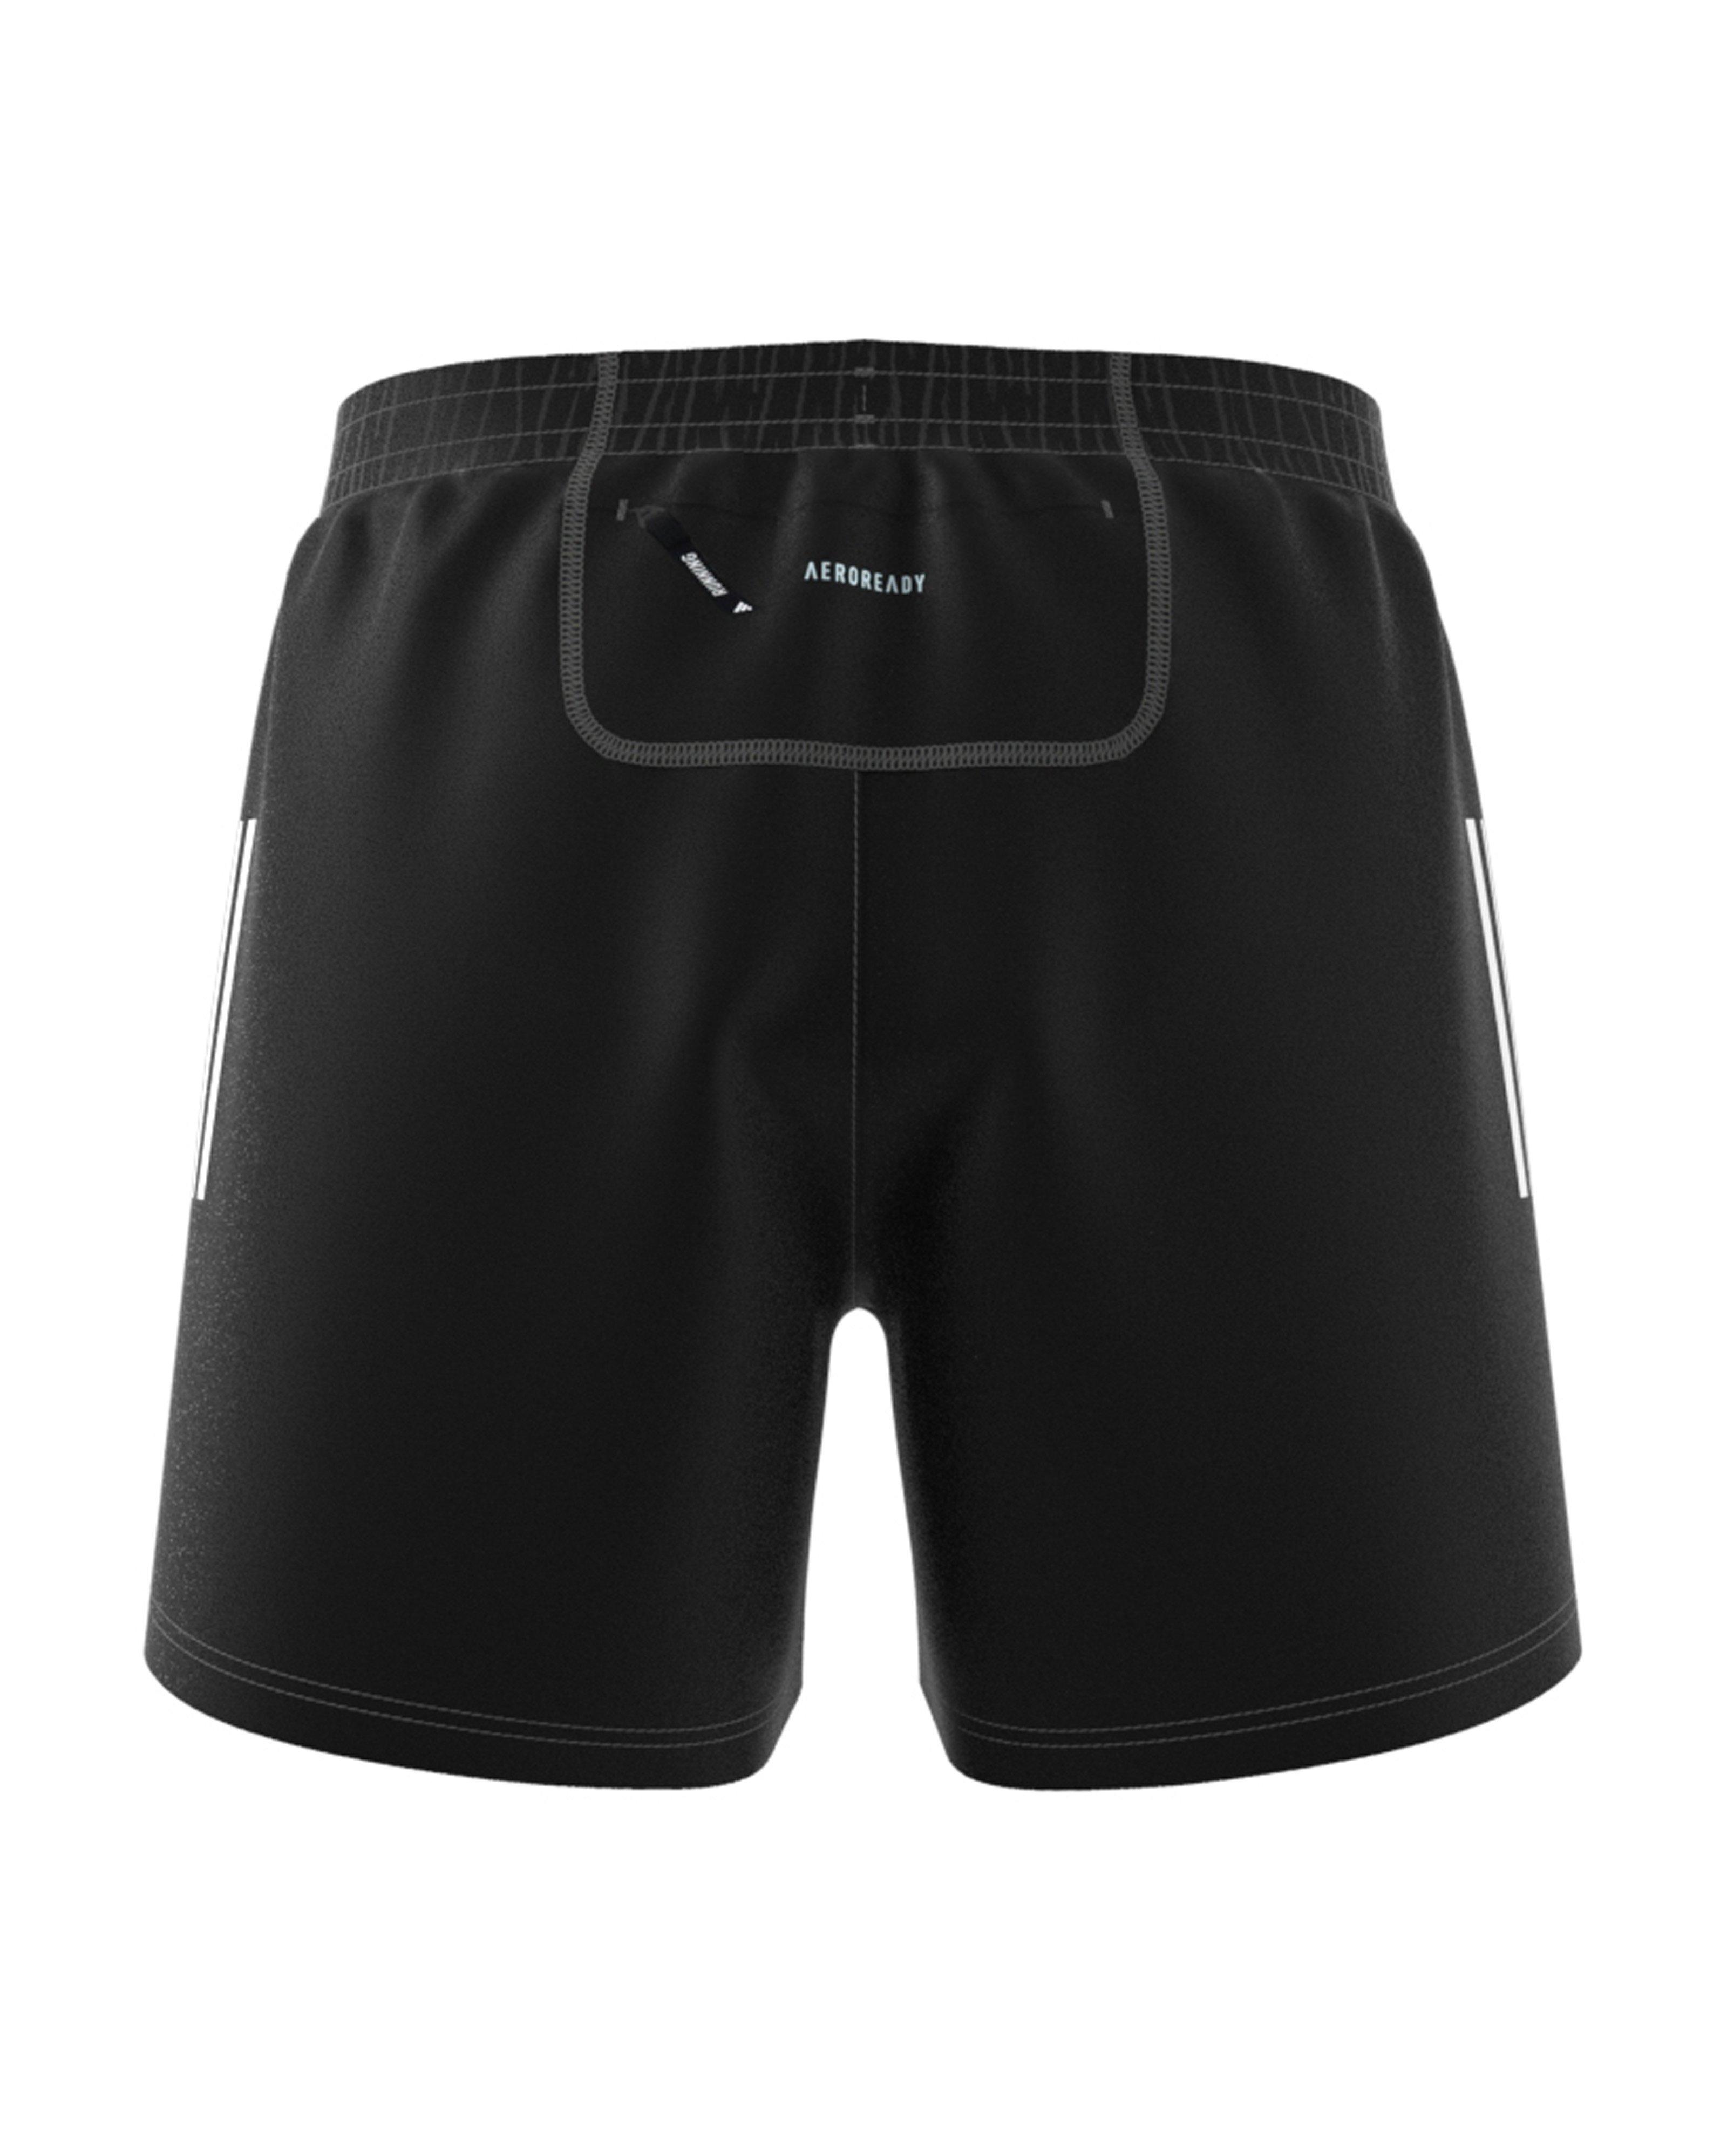 Adidas Men’s OTR B Running Shorts -  Black